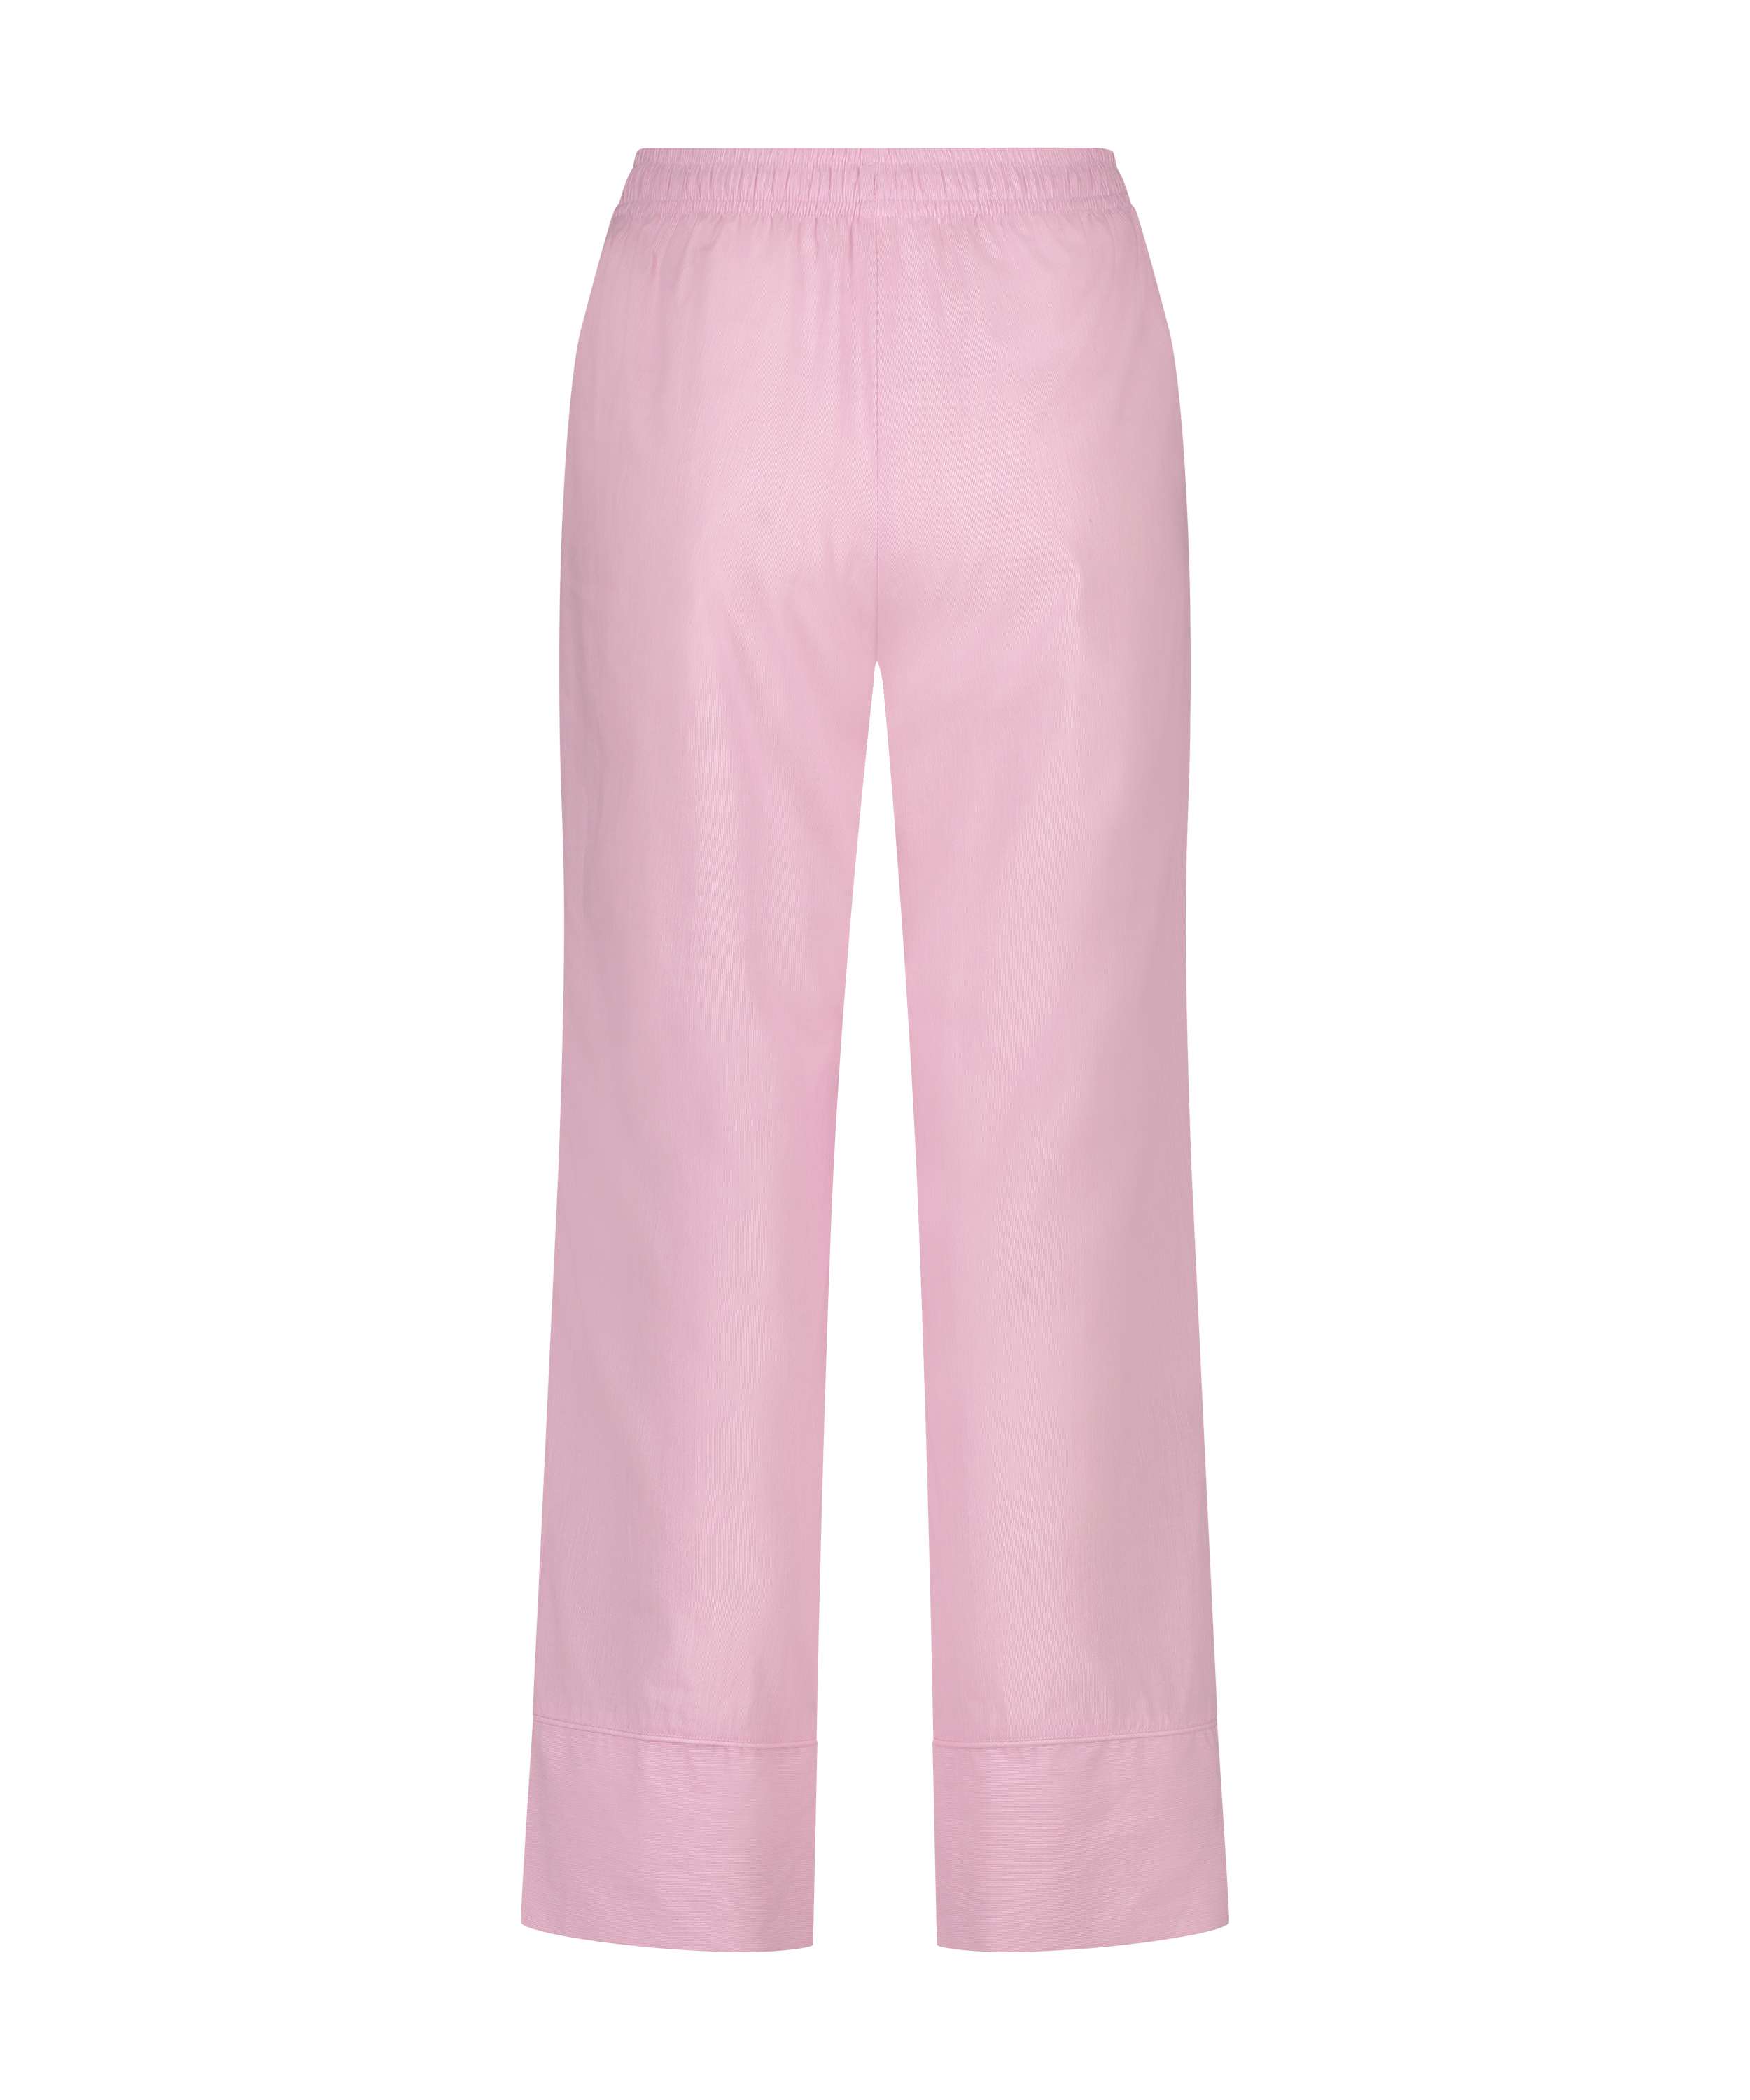 Stripy Pyjama Pants, Pink, main